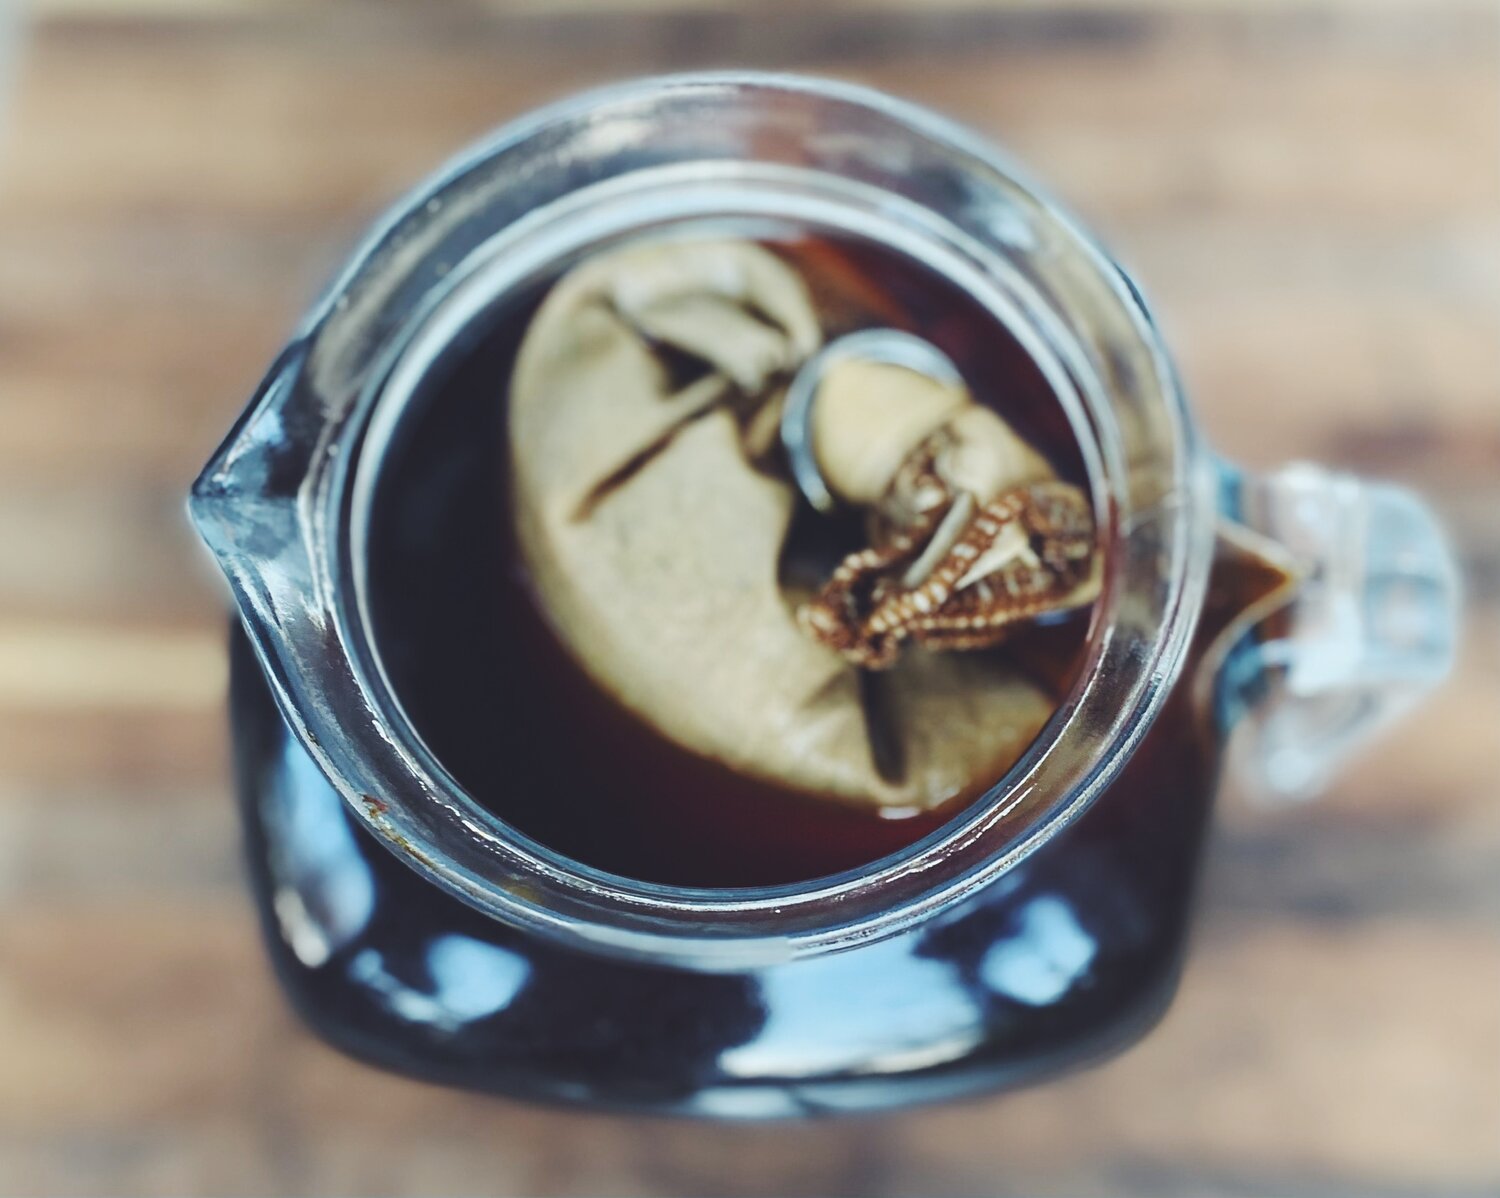 BREW AT HOME KIT — Sati Cold Brew Coffee